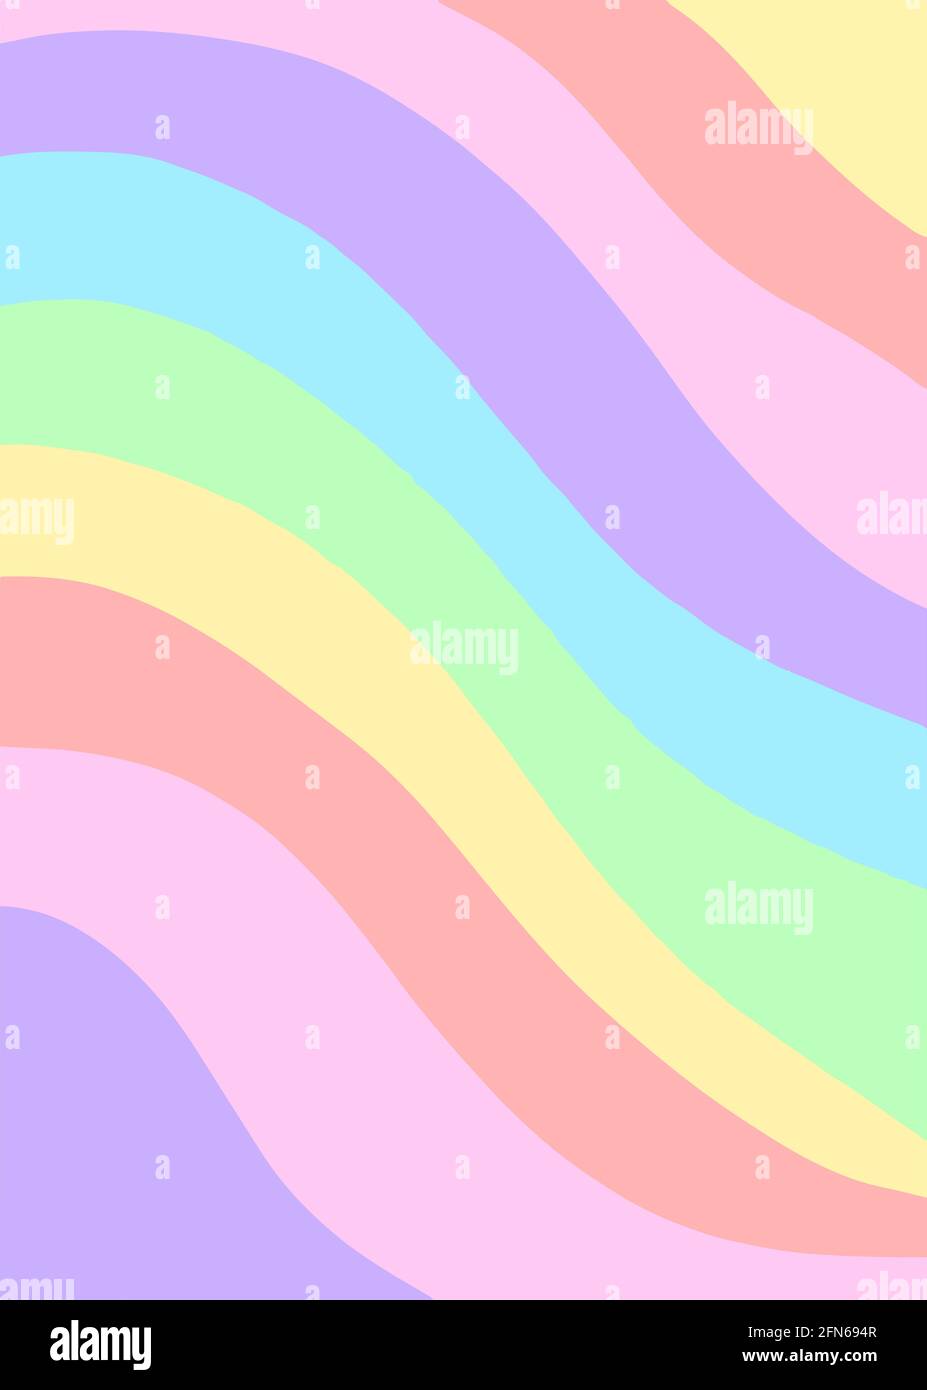 pastel rainbow background vector illustration Stock Vector